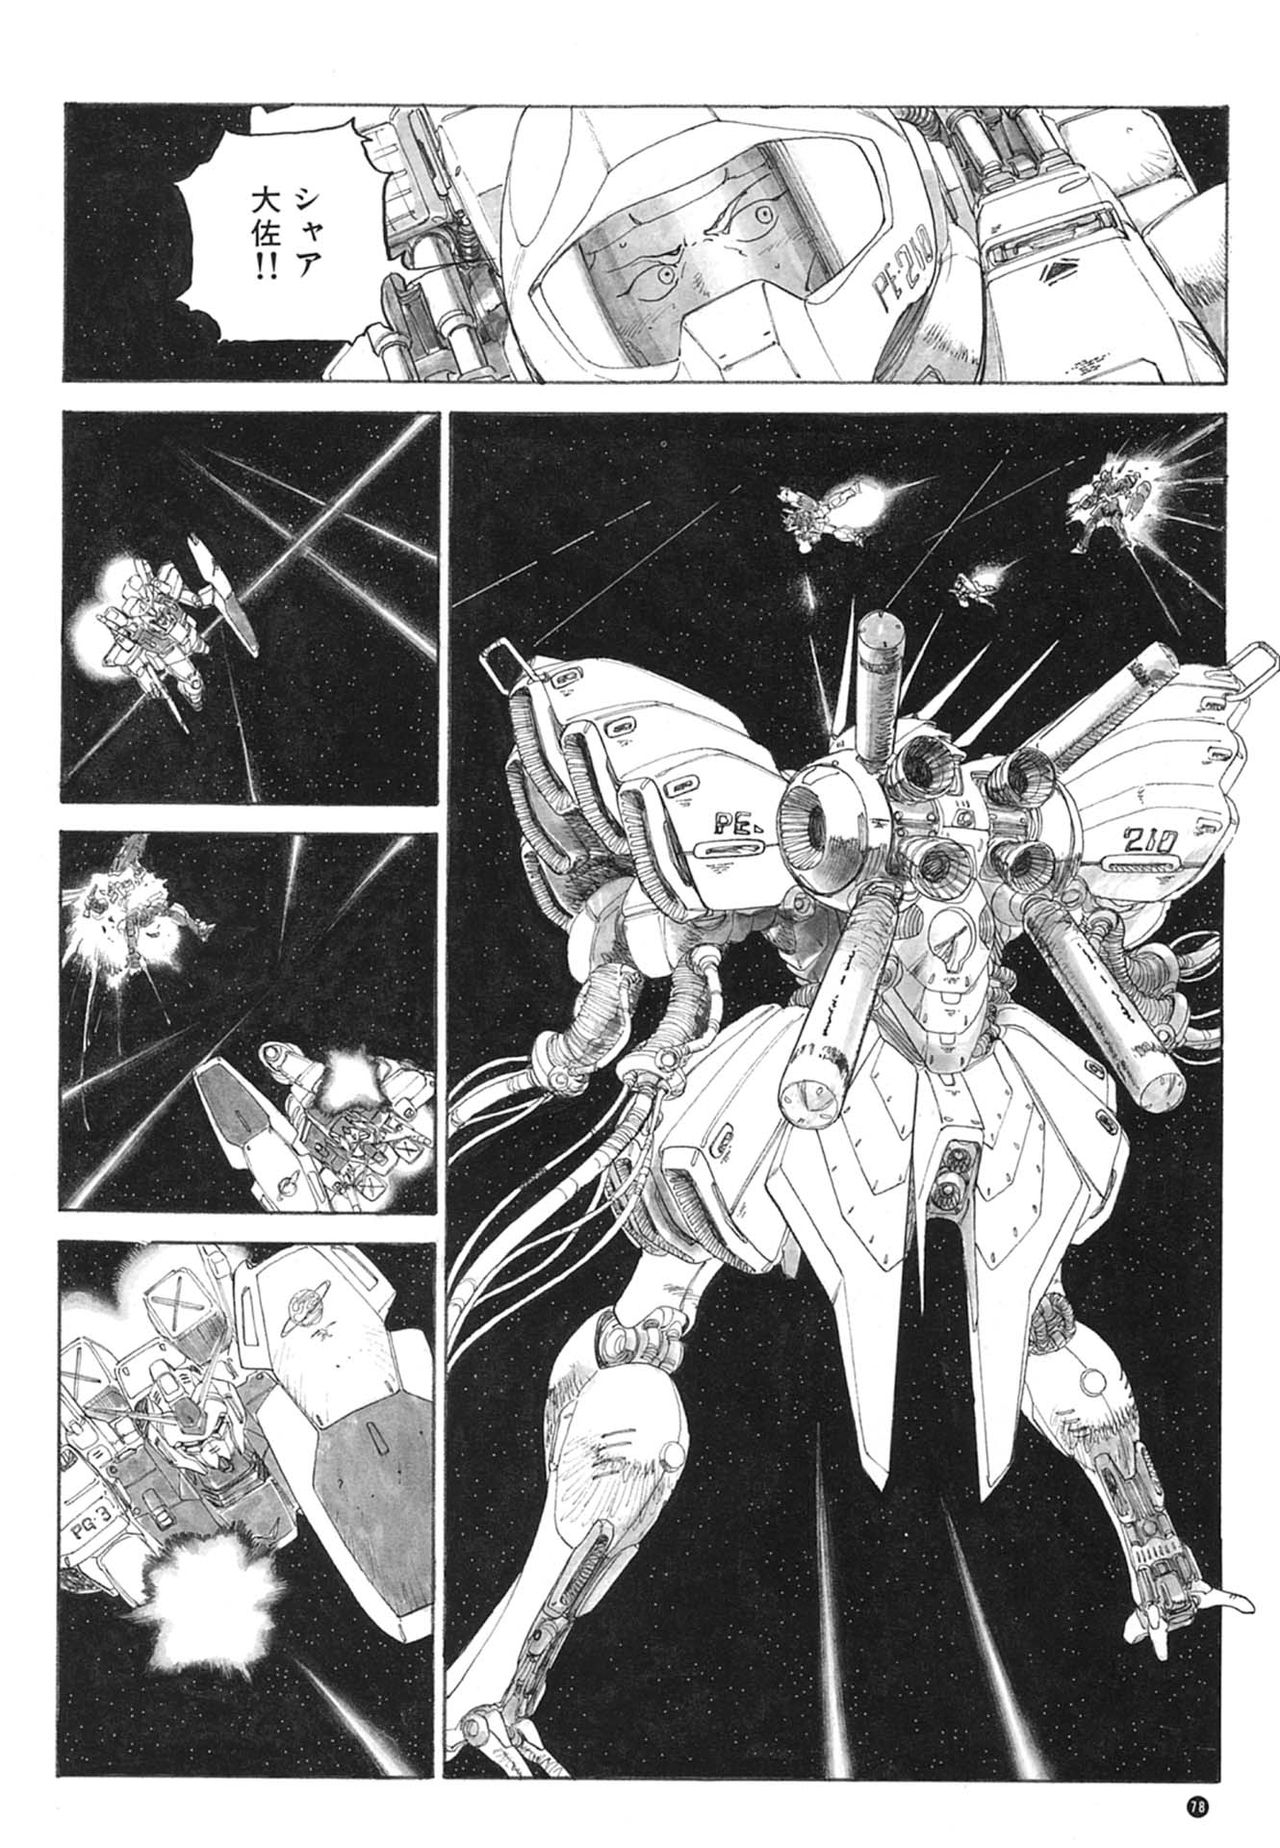 [Kazuhisa Kondo] Kazuhisa Kondo 2D & 3D Works - Go Ahead - From Mobile Suit Gundam to Original Mechanism 77